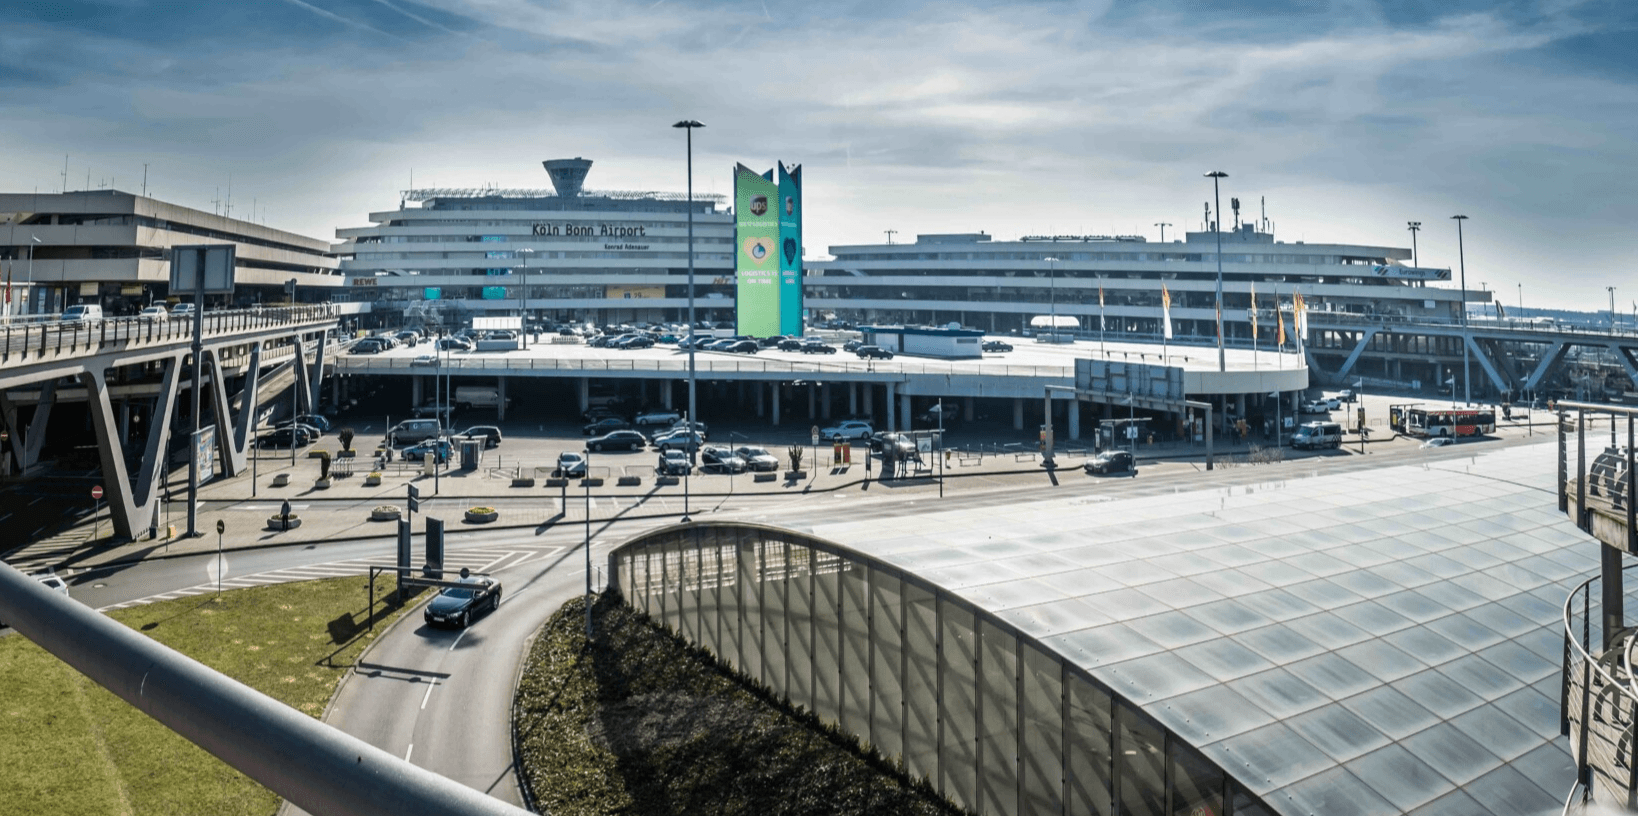 Koln Airport (CGN)